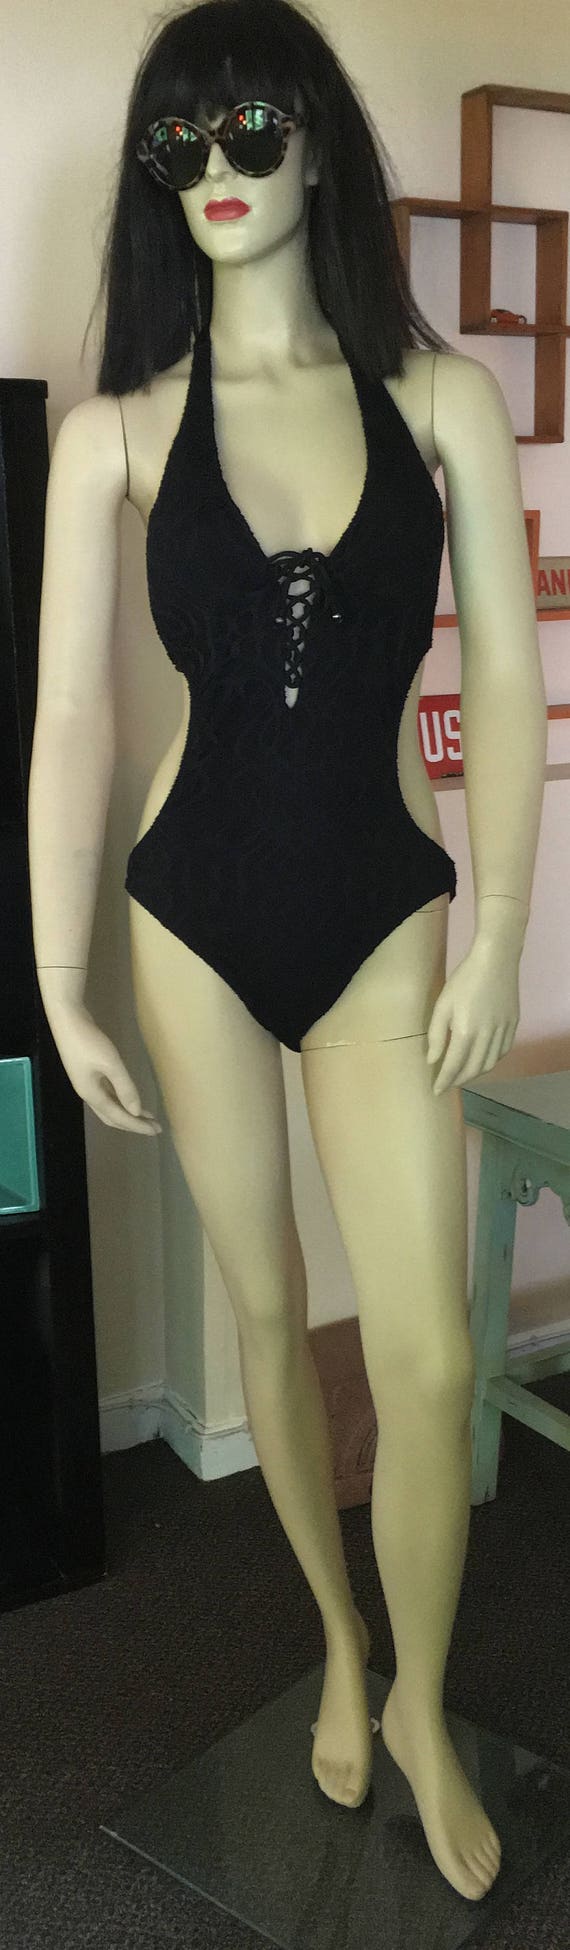 black halter top one piece bathing suit